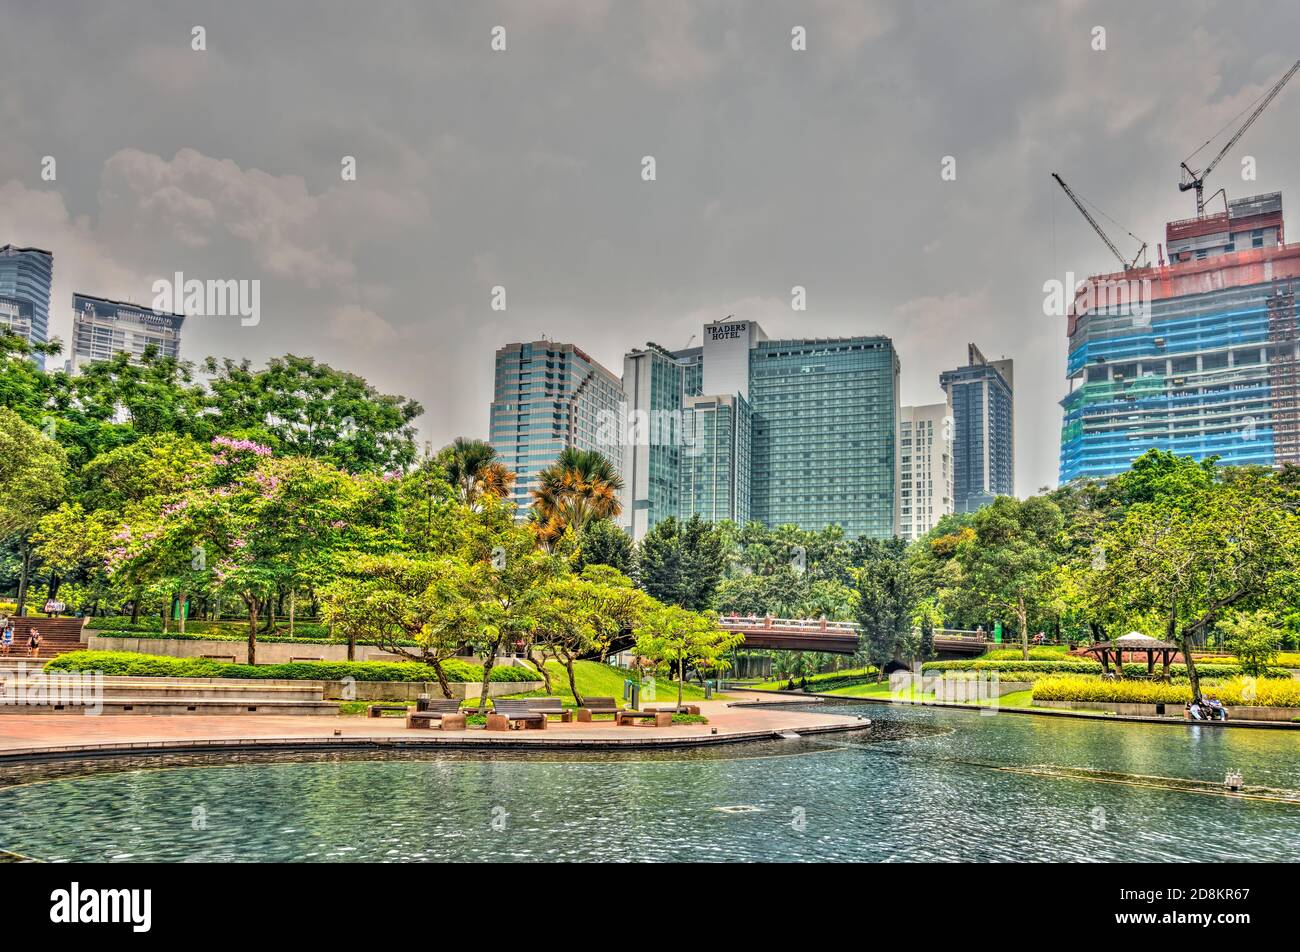 KLCC District, Kuala Lumpur, HDR image Banque D'Images